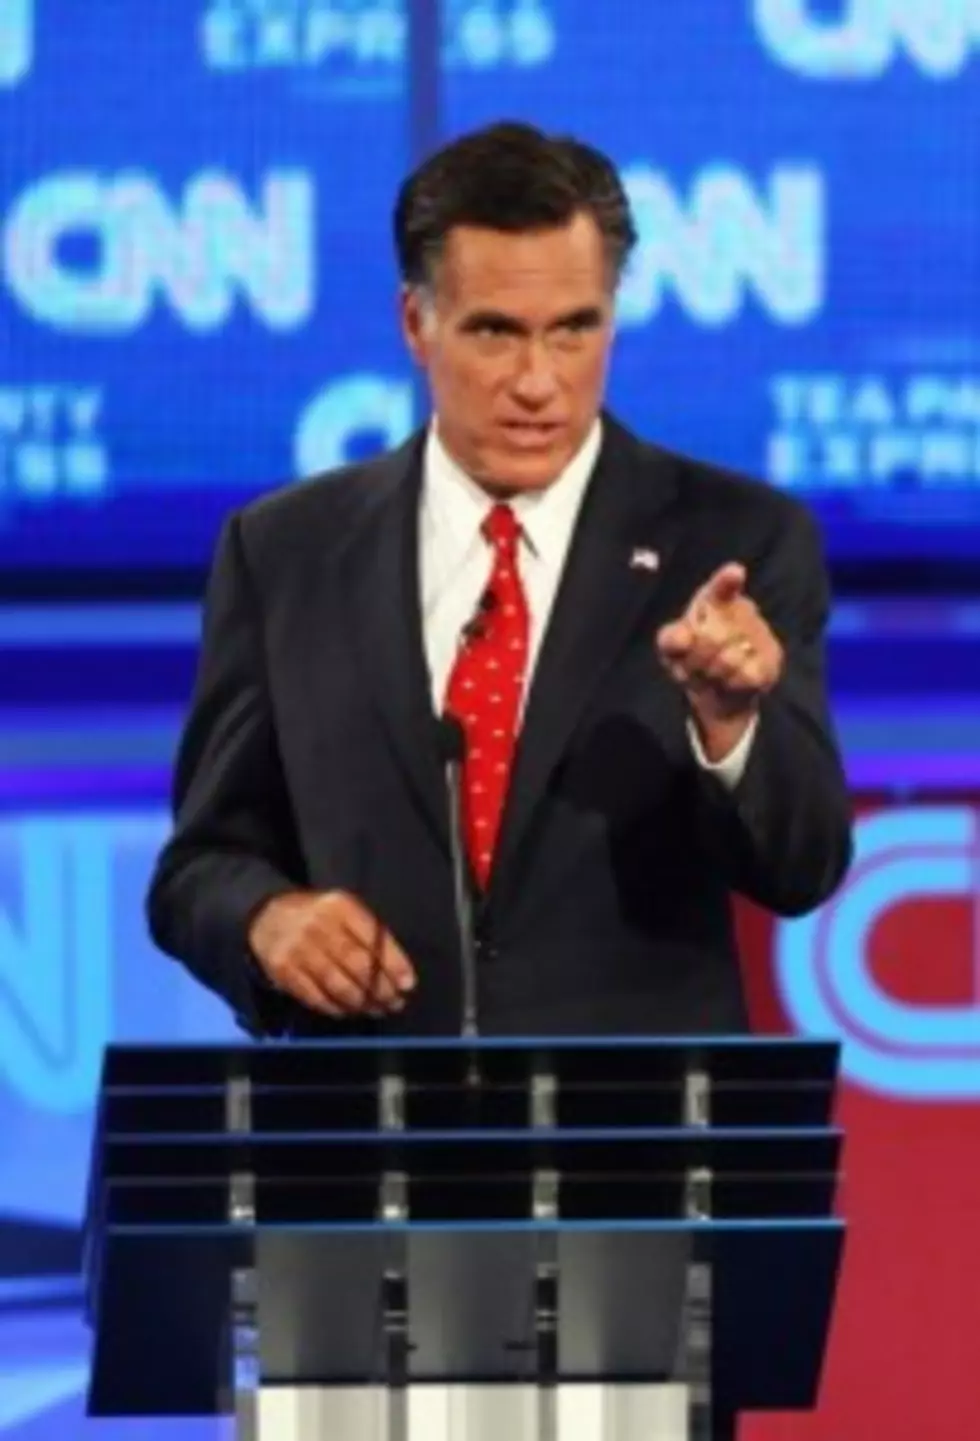 Romney and the Mainstream Media